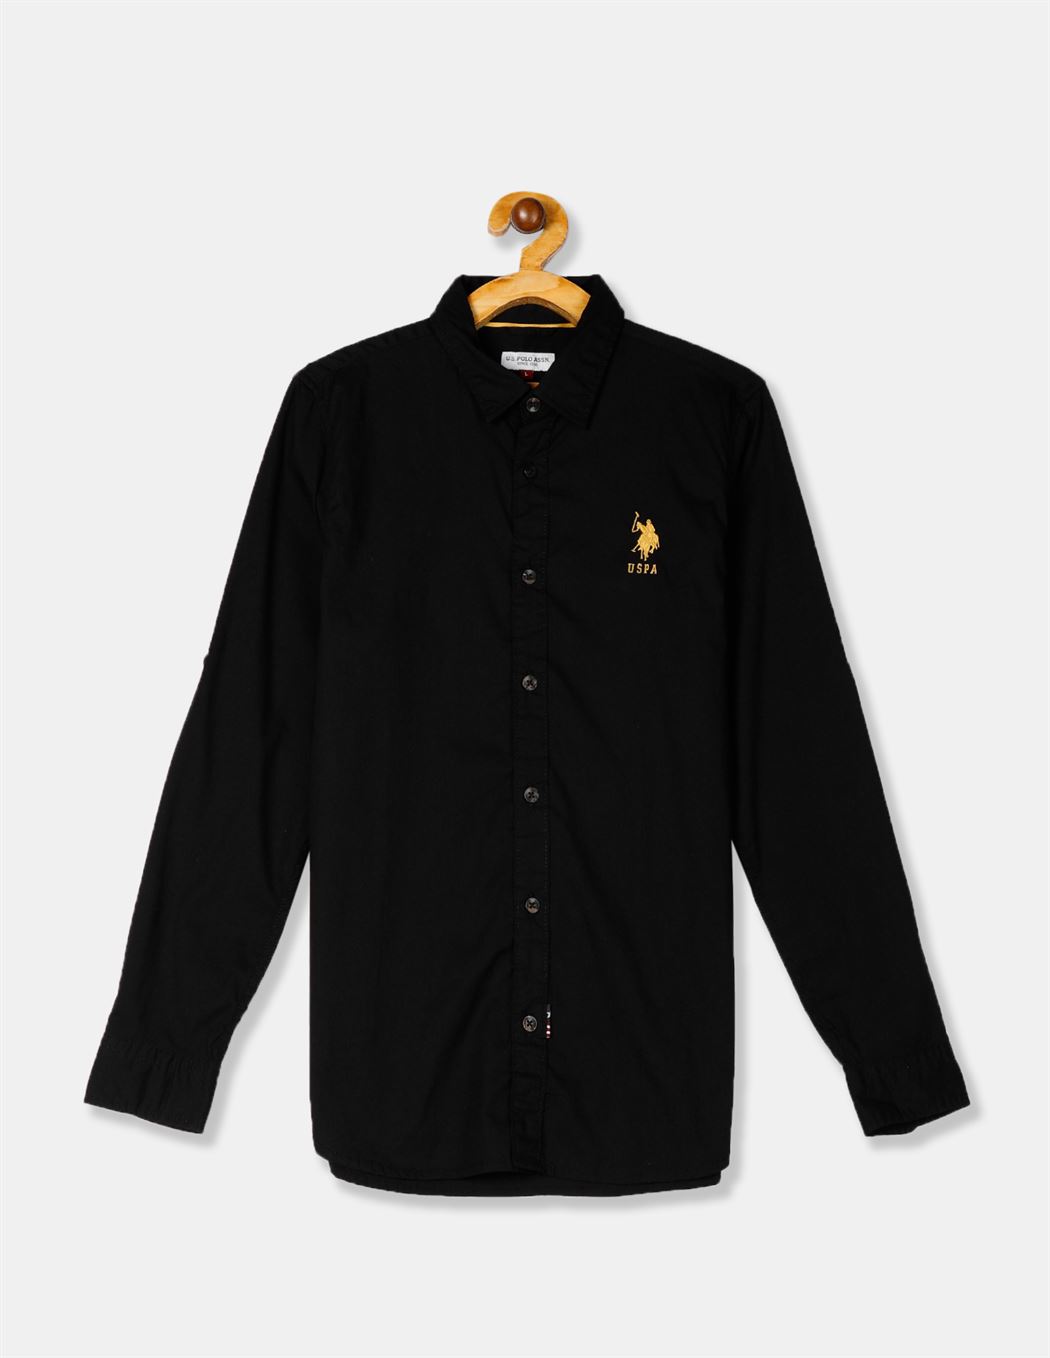 U.S. Polo Assn. Black Boys Spread Collar Solid Shirt